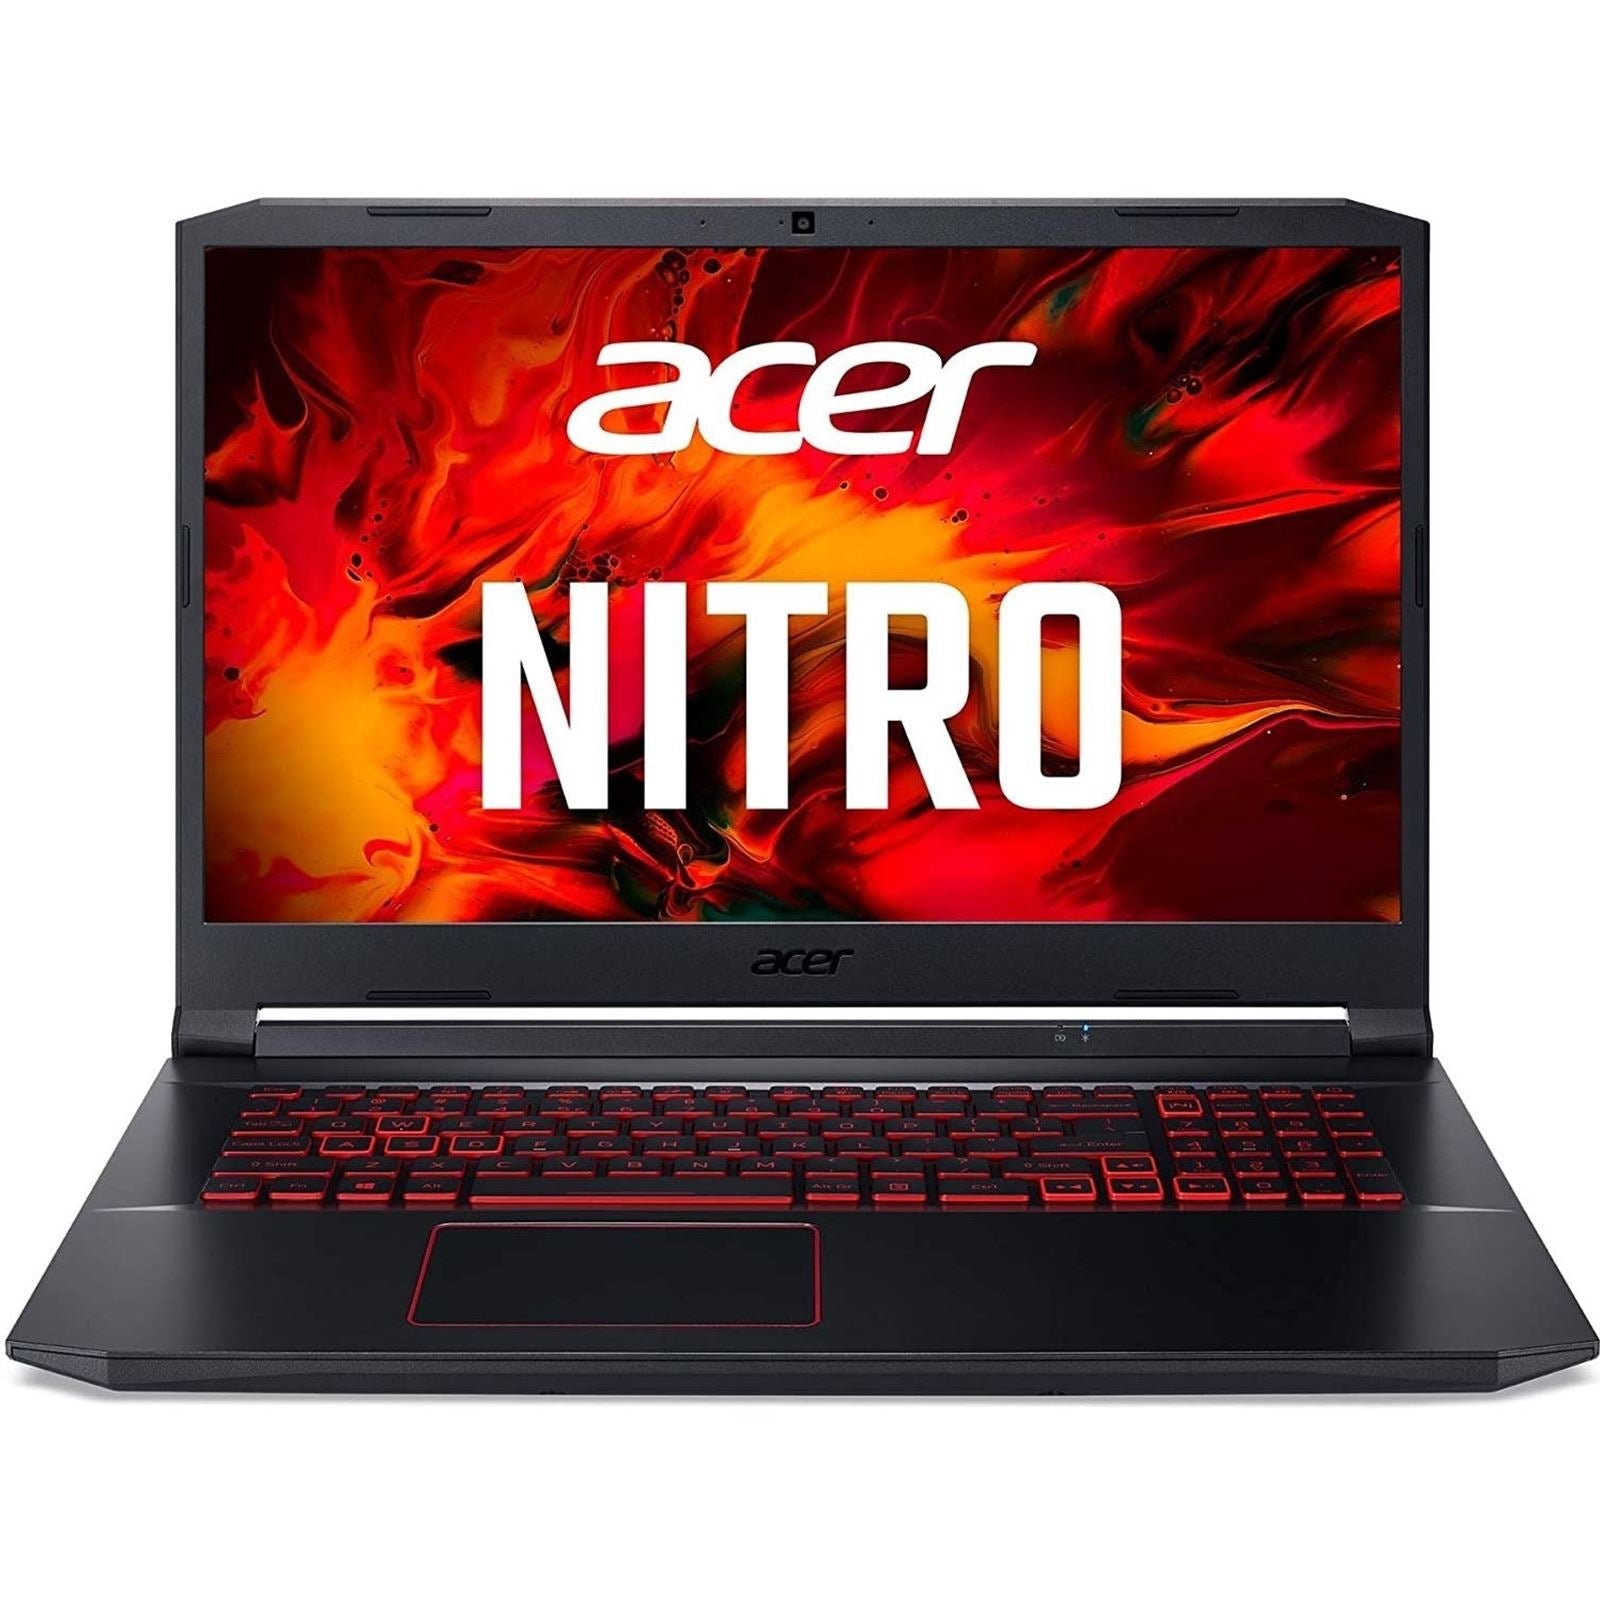 OPEN BOX Acer Nitro 5 Gaming Laptop, 15.6 Inch Full HD 144Hz Display, Intel Core i5-11400H Processor, 8GB RAM, 512GB SSD, Nvidia GTX 1650 4GB Graphics, Windows 11